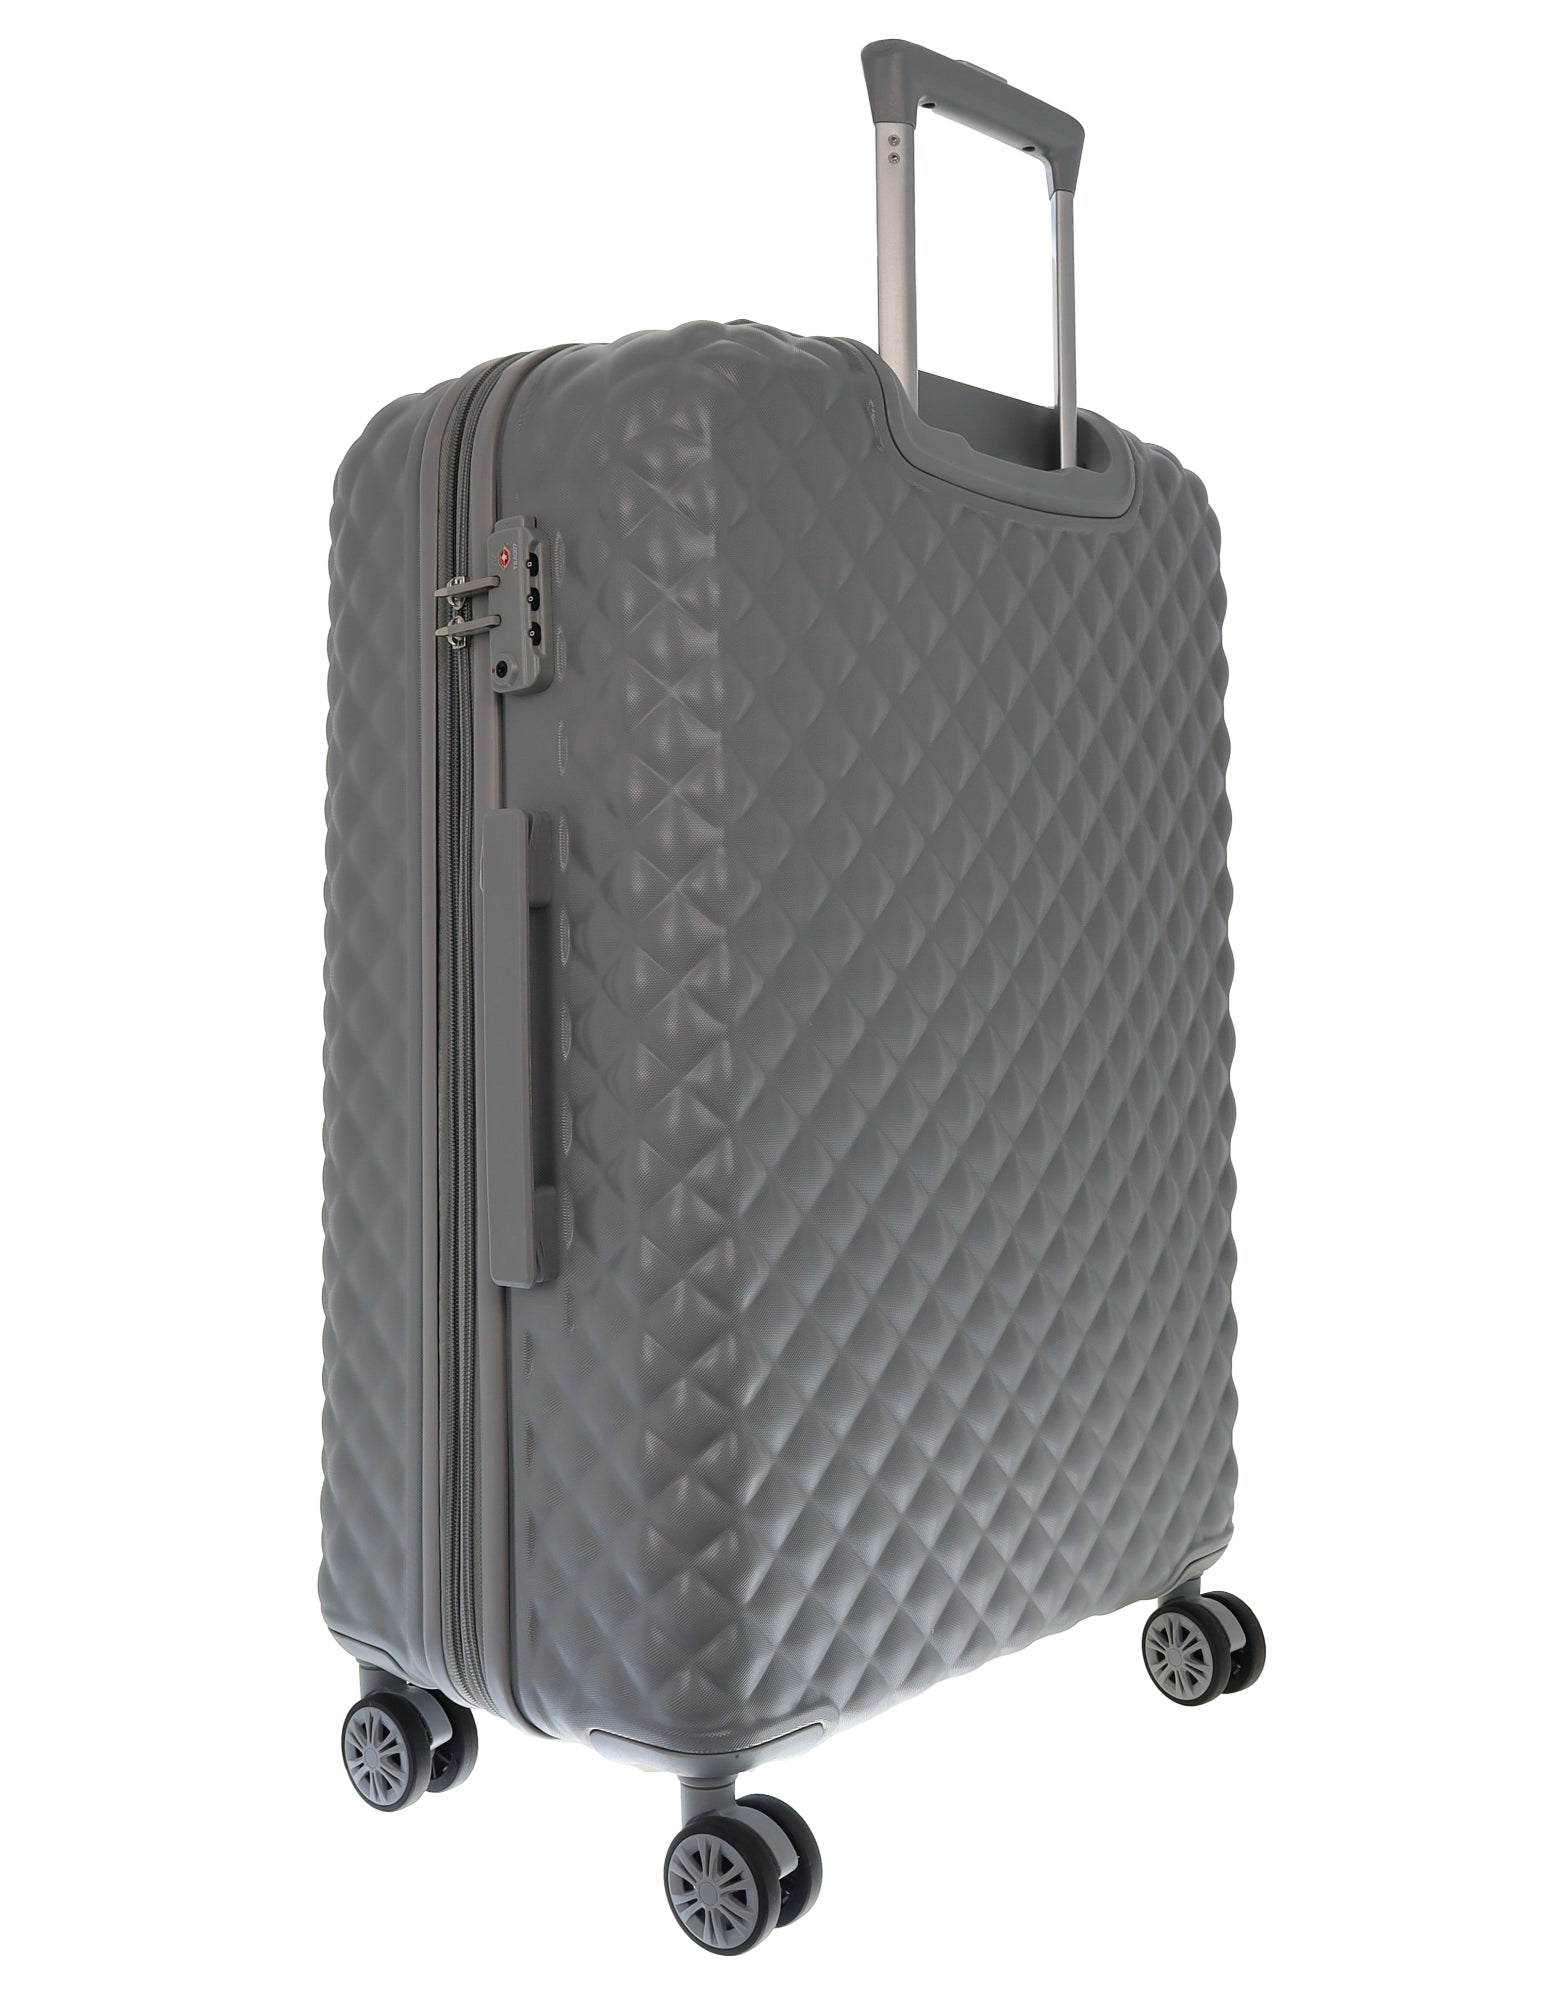 Pierre Cardin 70cm MEDIUM Hard Shell Suitcase in Teal